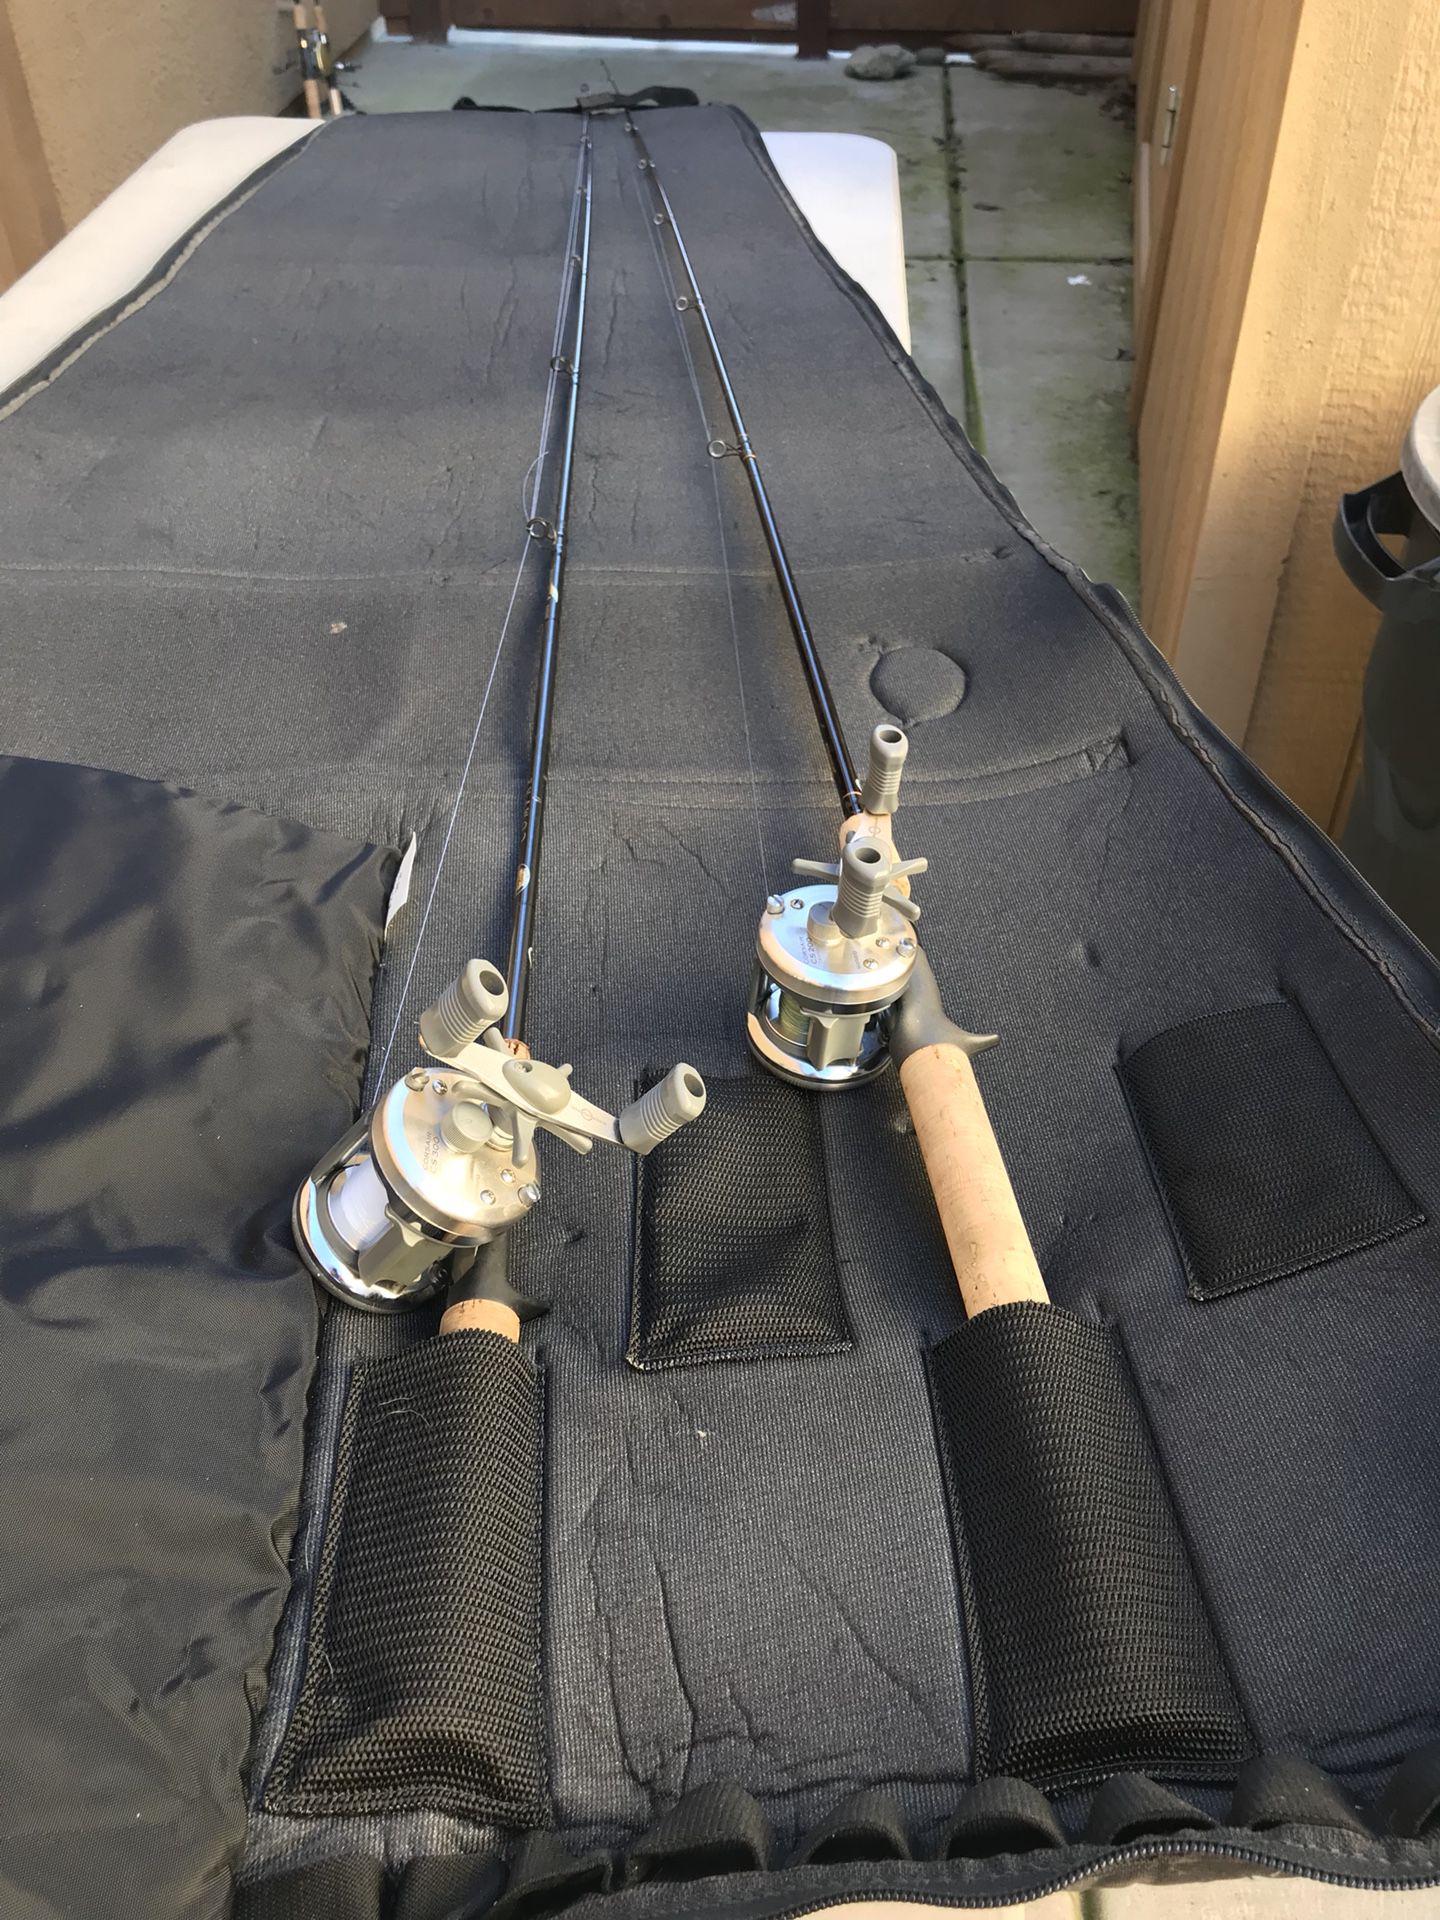 Shimano fishing reels, poles + tackle boxes full of gear